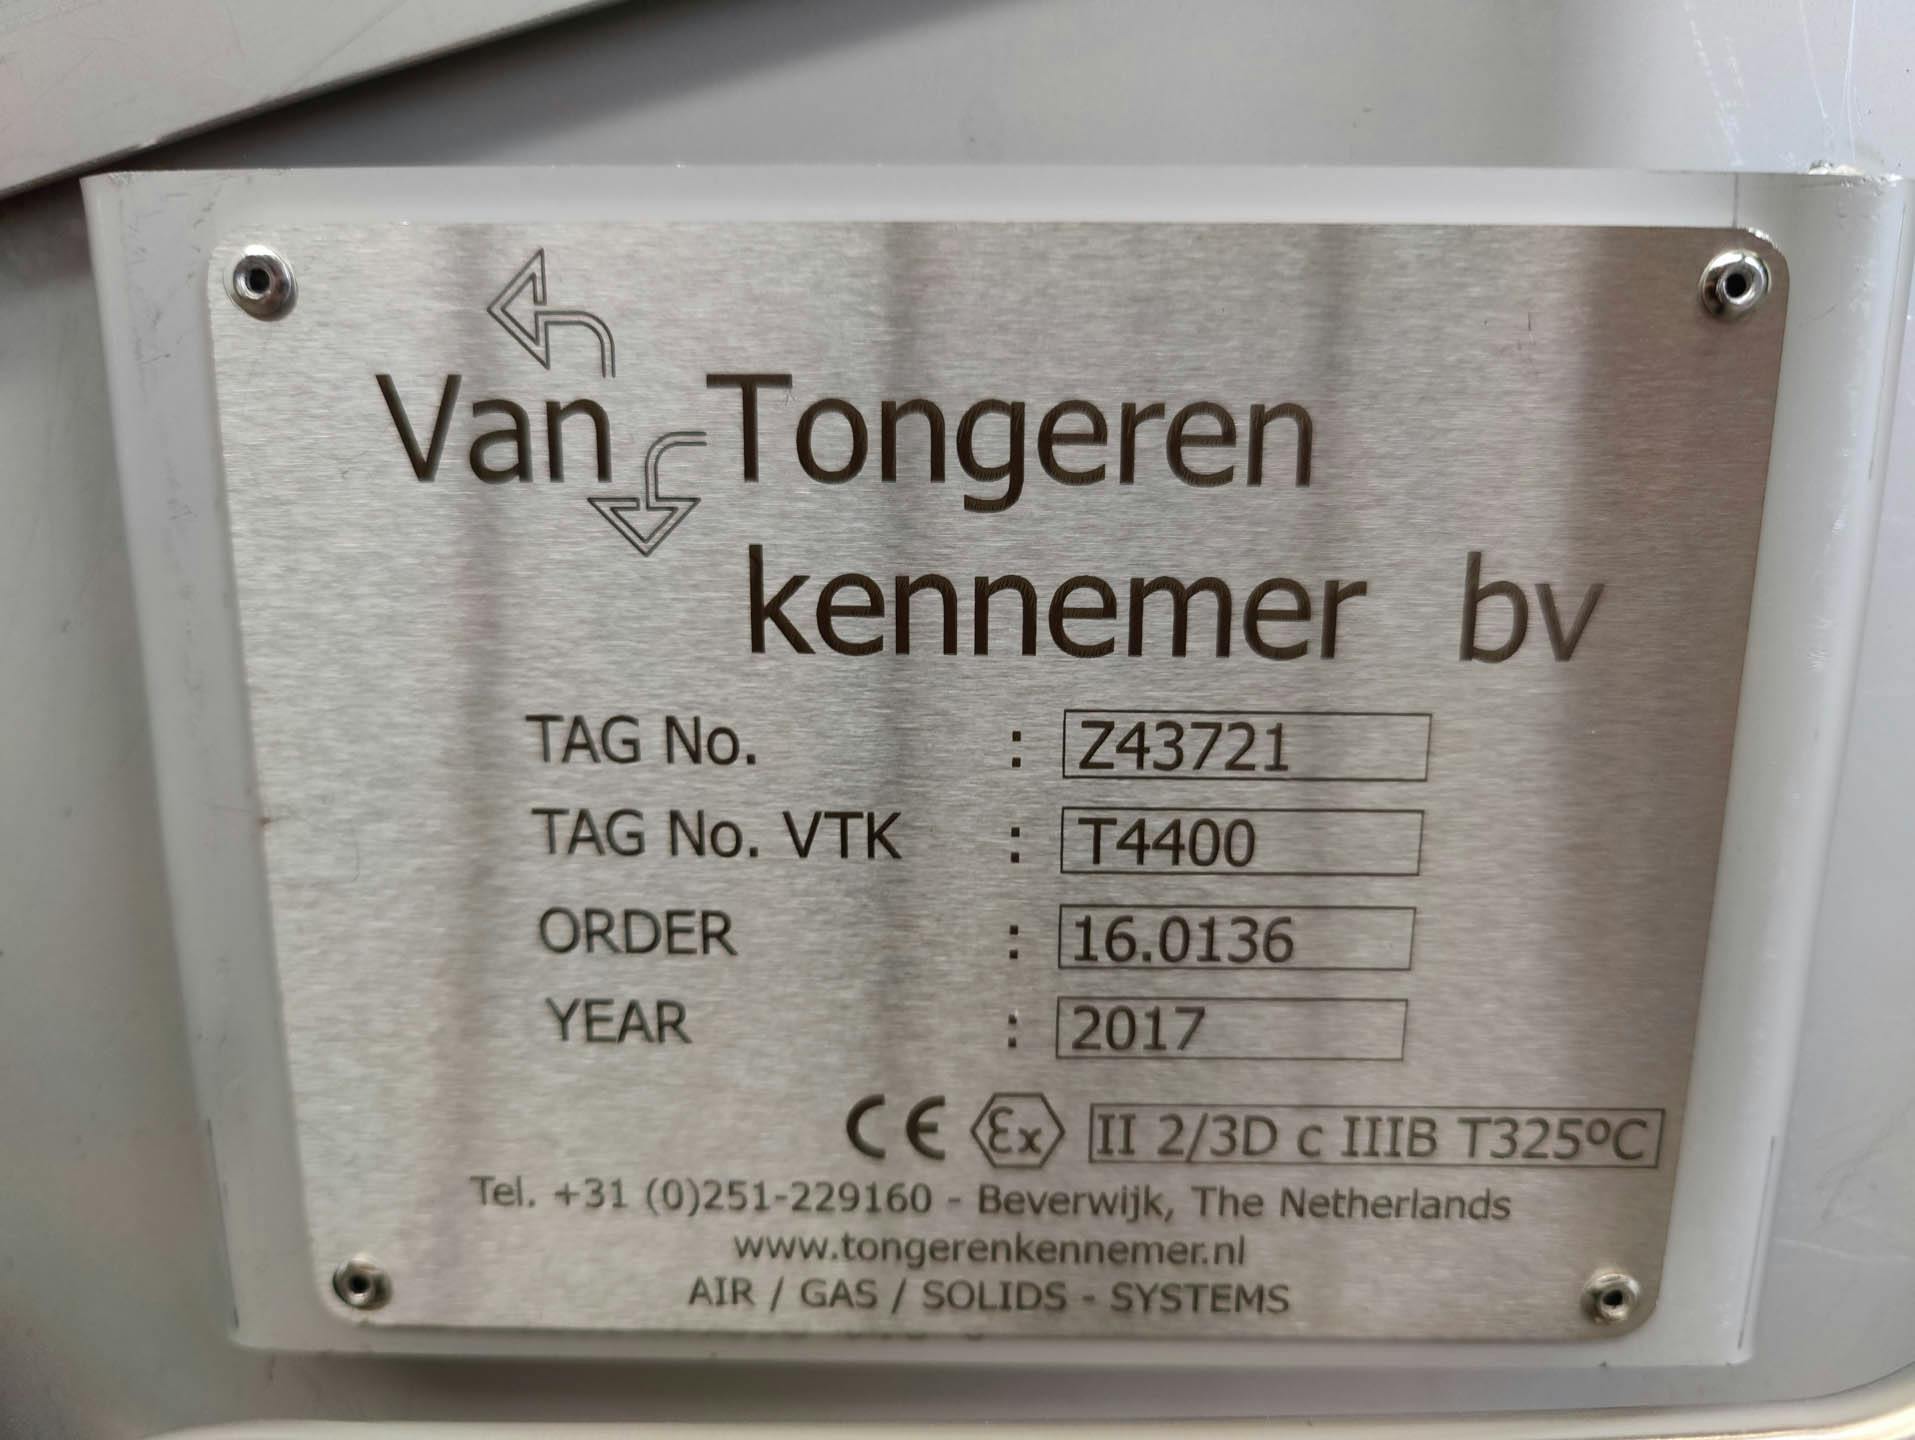 Van Tongeren - Trasportatore a coclea orizzontale - image 9